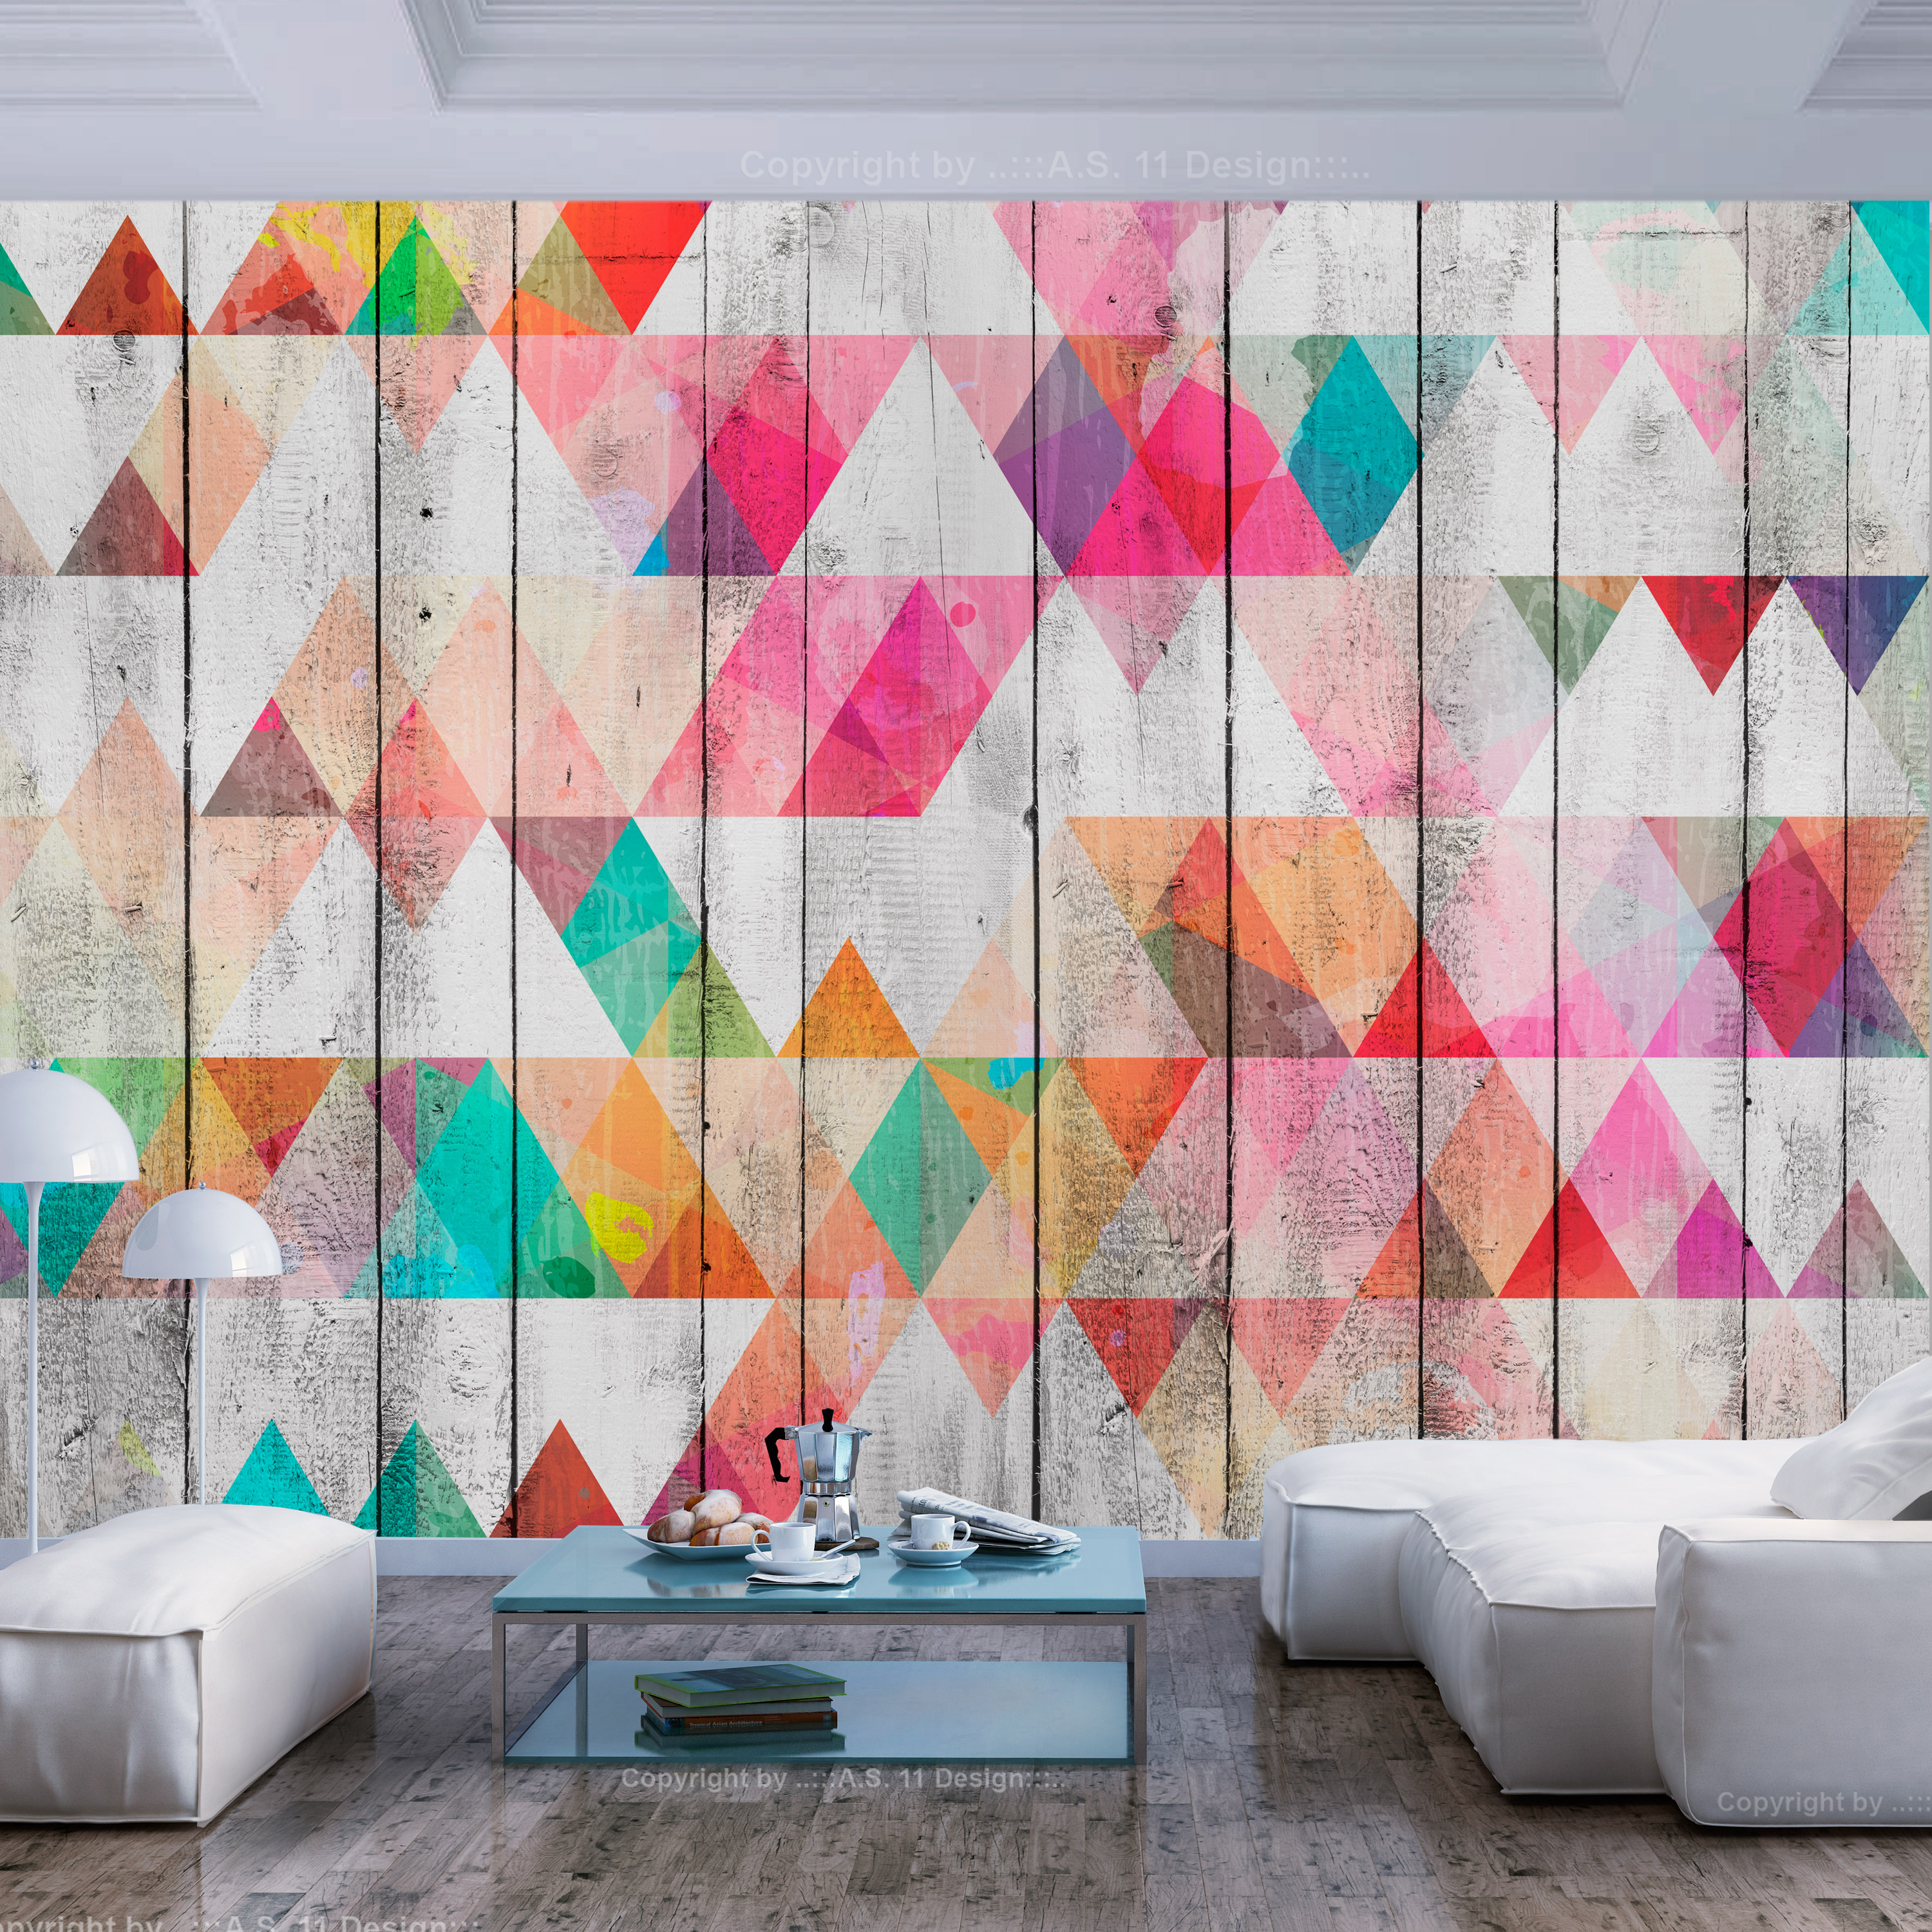 Self-adhesive Wallpaper - Rainbow Triangles - 441x315